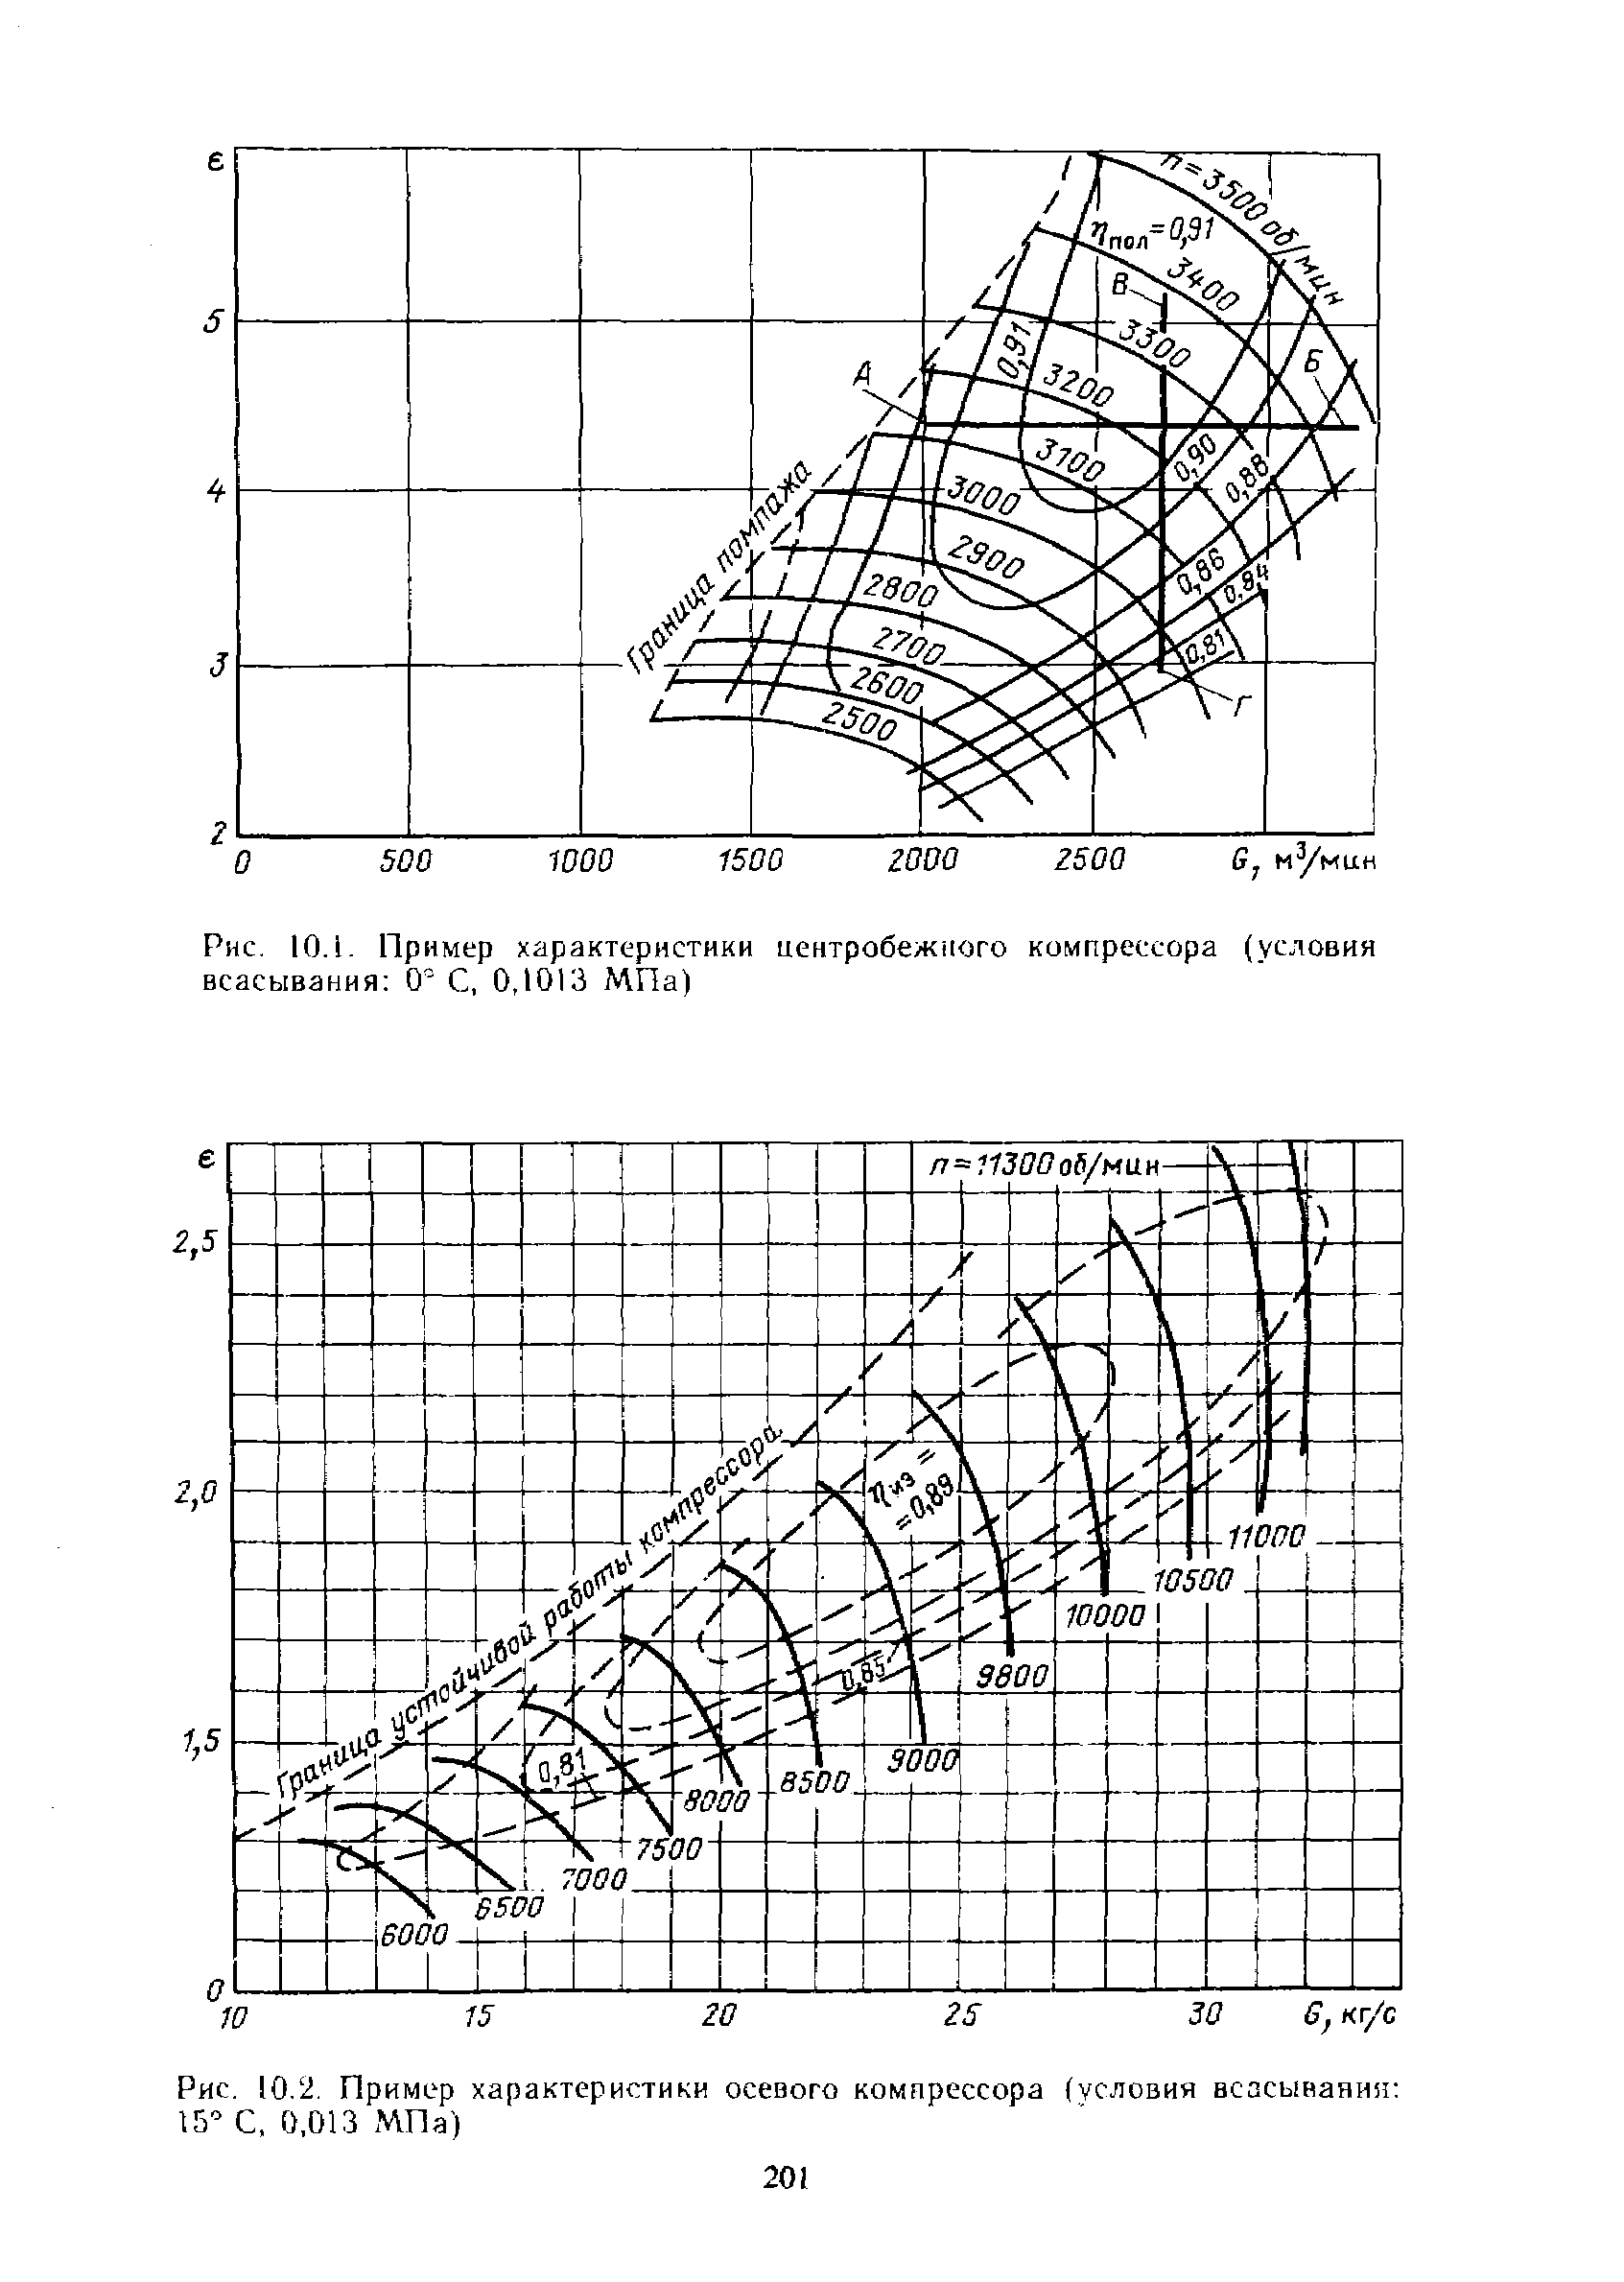 Рис. 10.L Пример <a href="/info/448063">характеристики центробежного компрессора</a> (условия всасывания 0° С, 0,1013 МПа)
